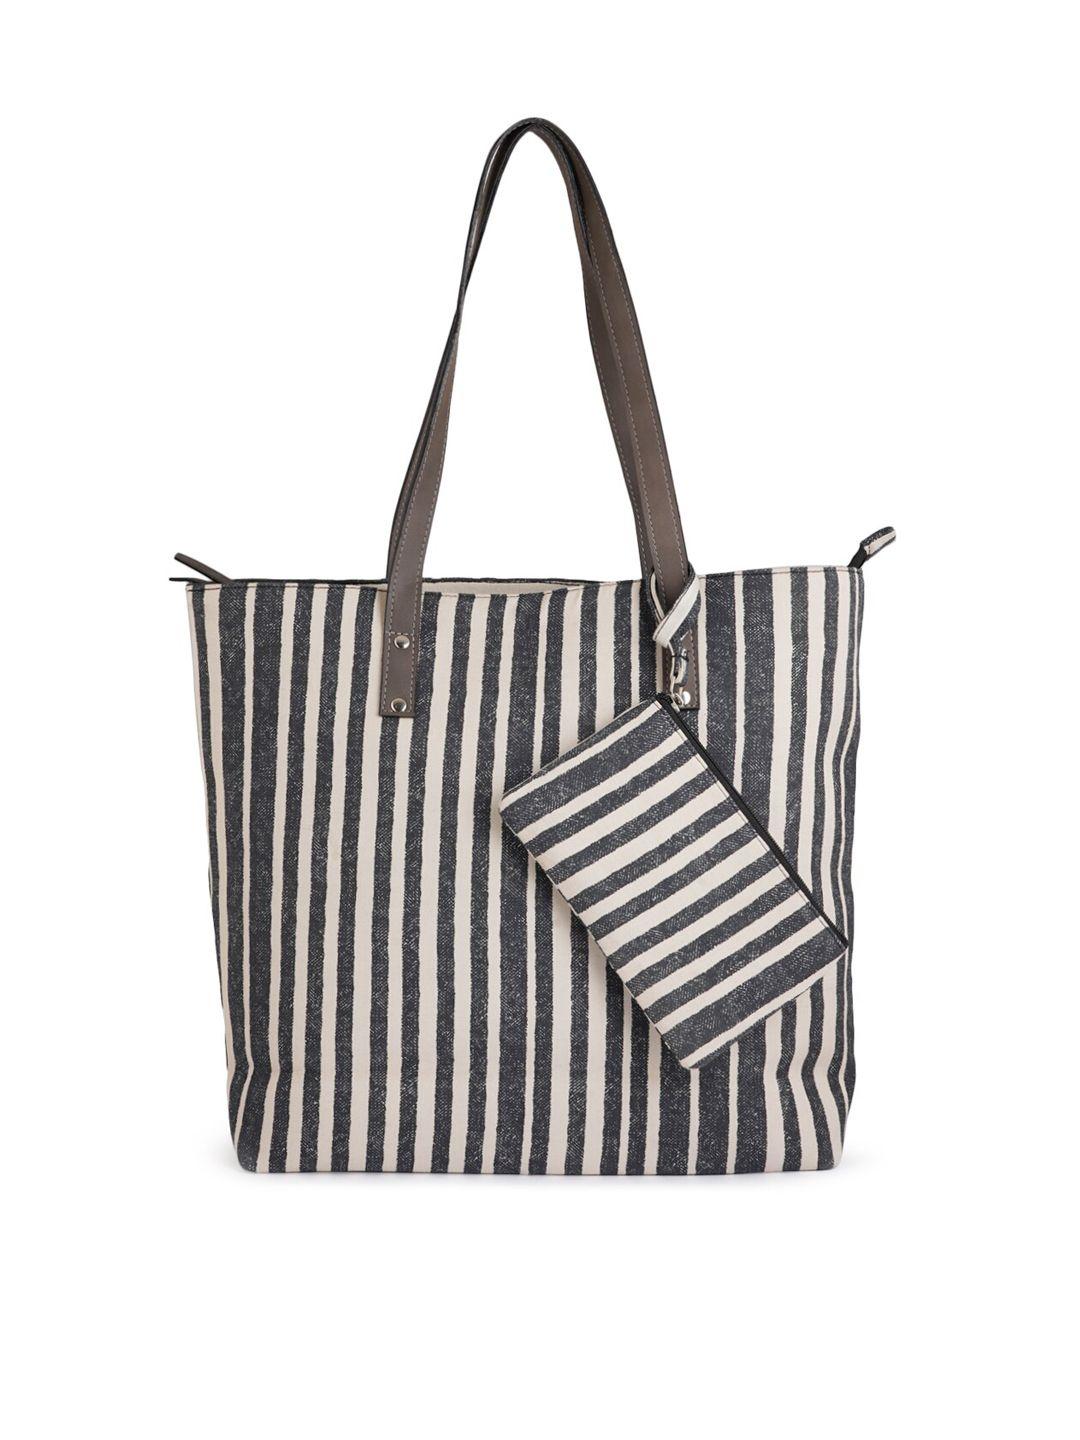 style shoes white & black striped oversized shopper handheld bag